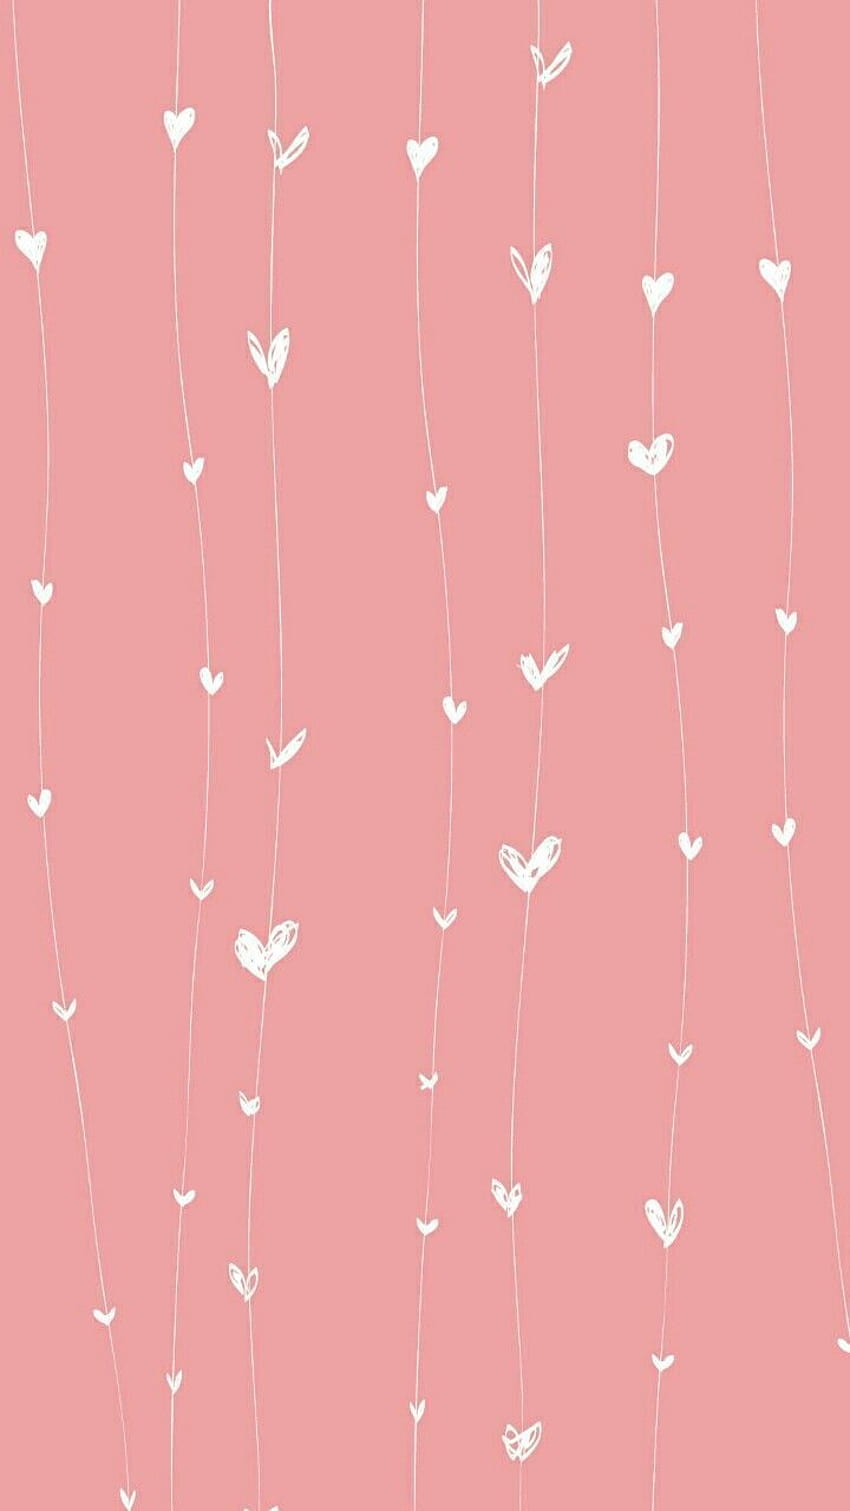 Jantung Vertikal, valentine vertikal wallpaper ponsel HD